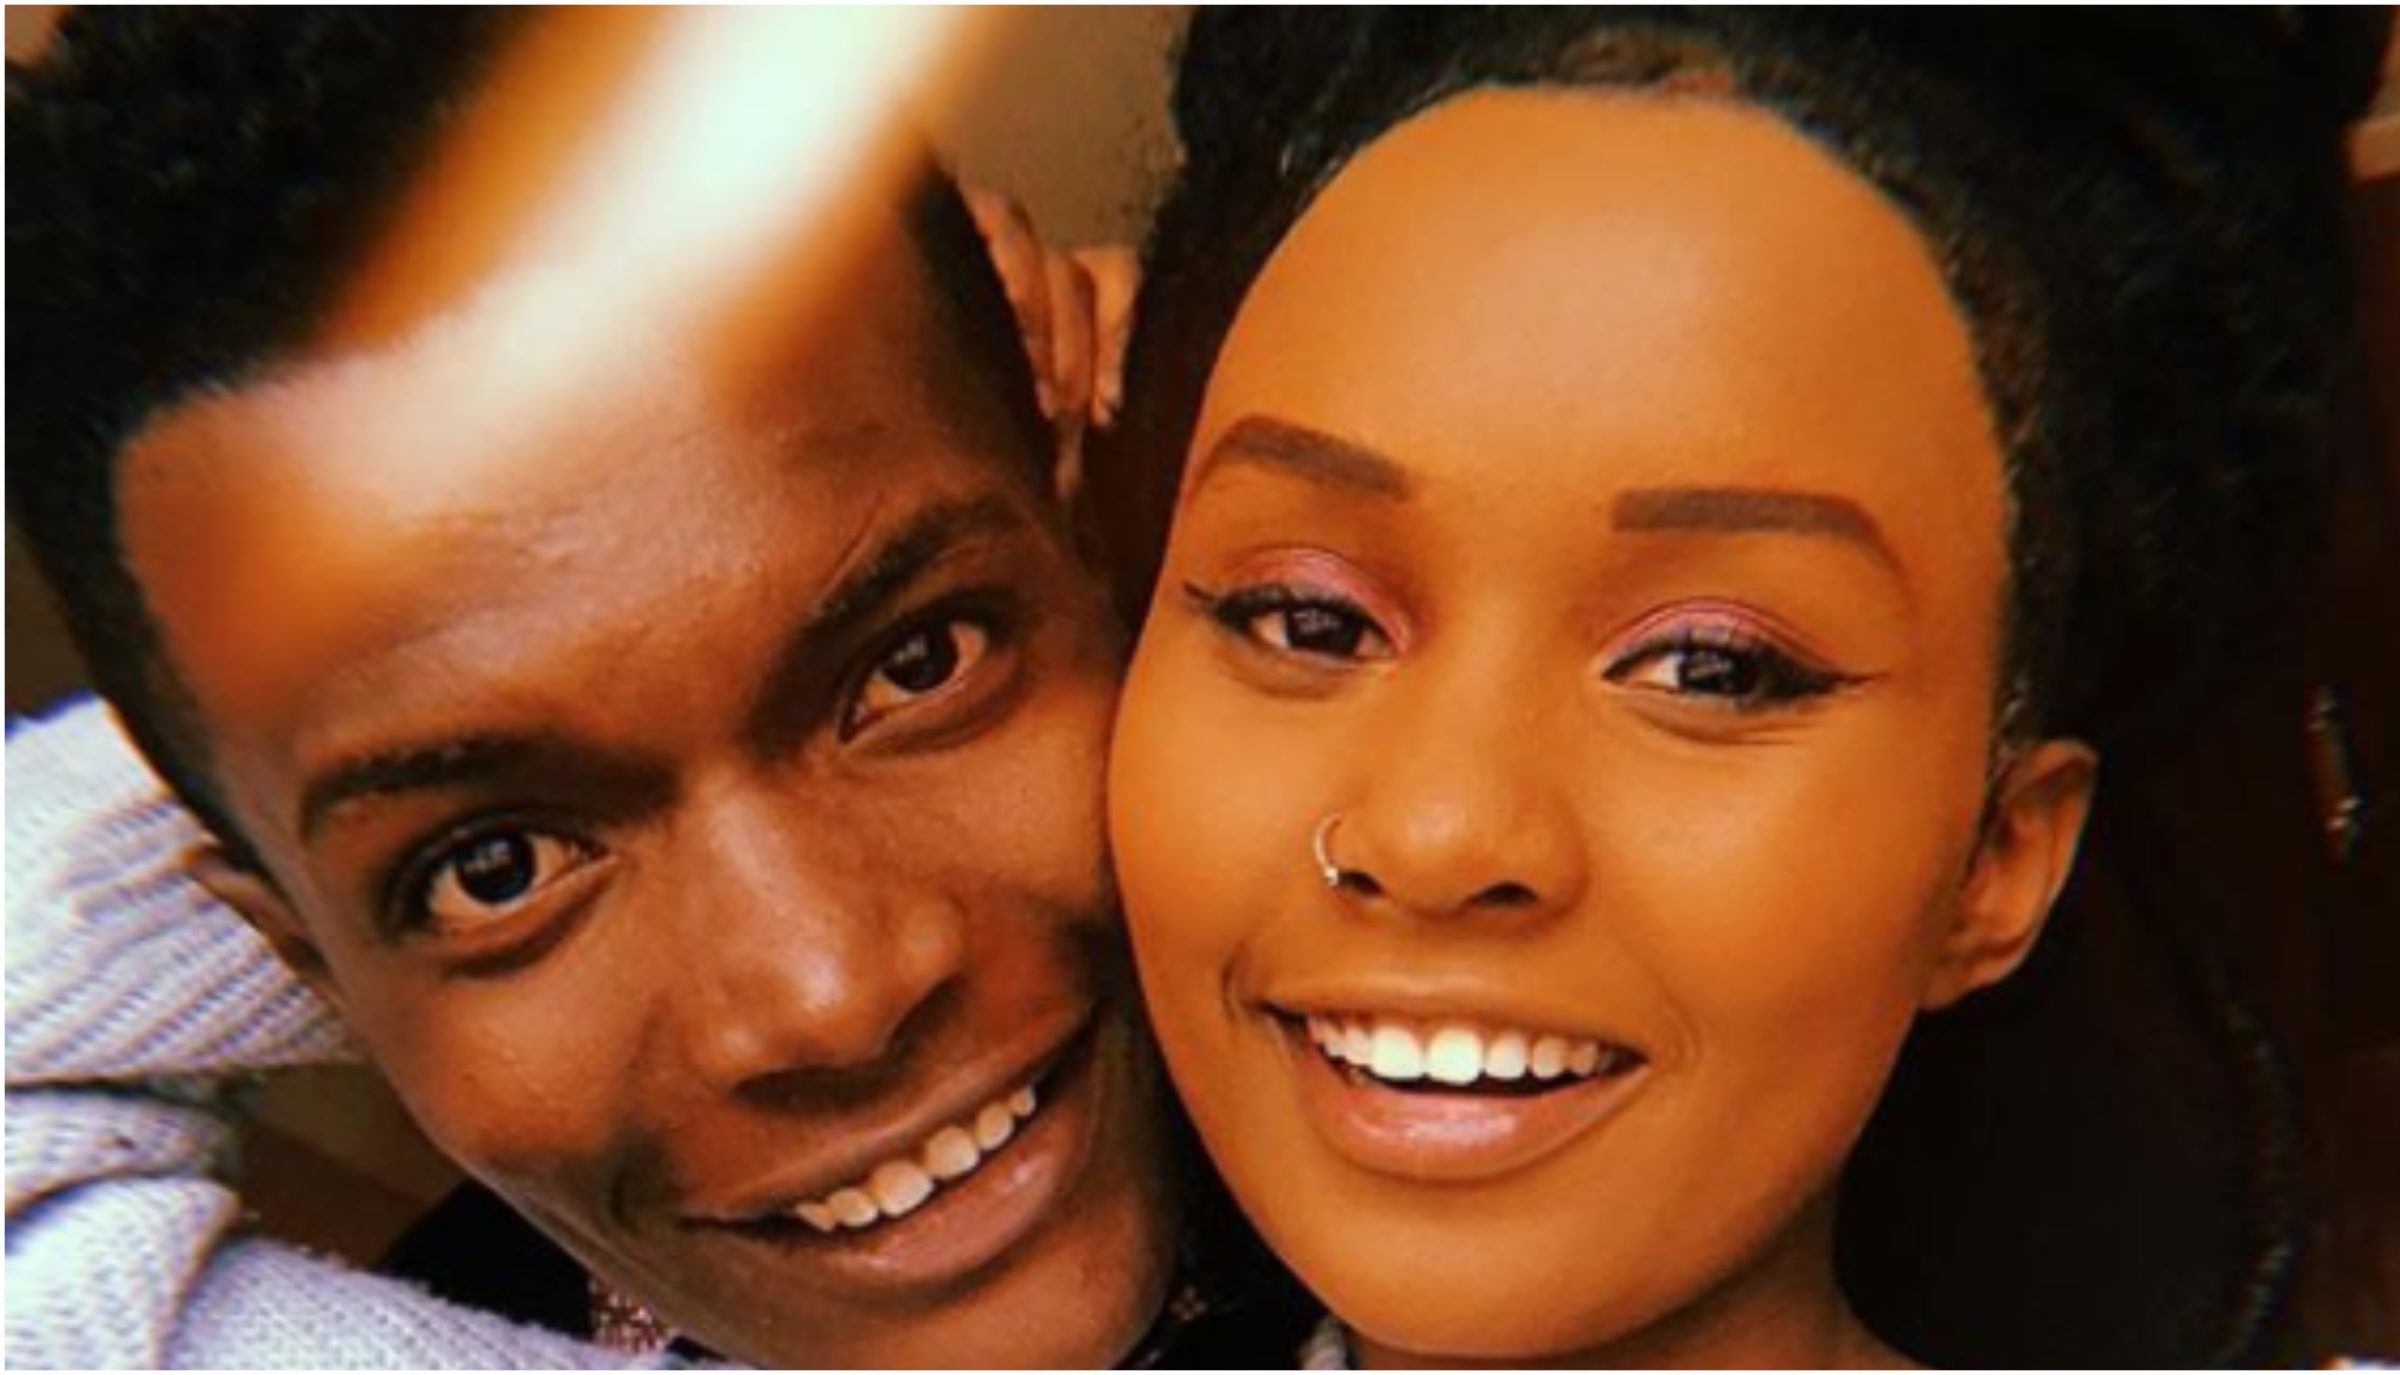 Tyler Mbaya of Machachari's relationship started how most modern relationships start